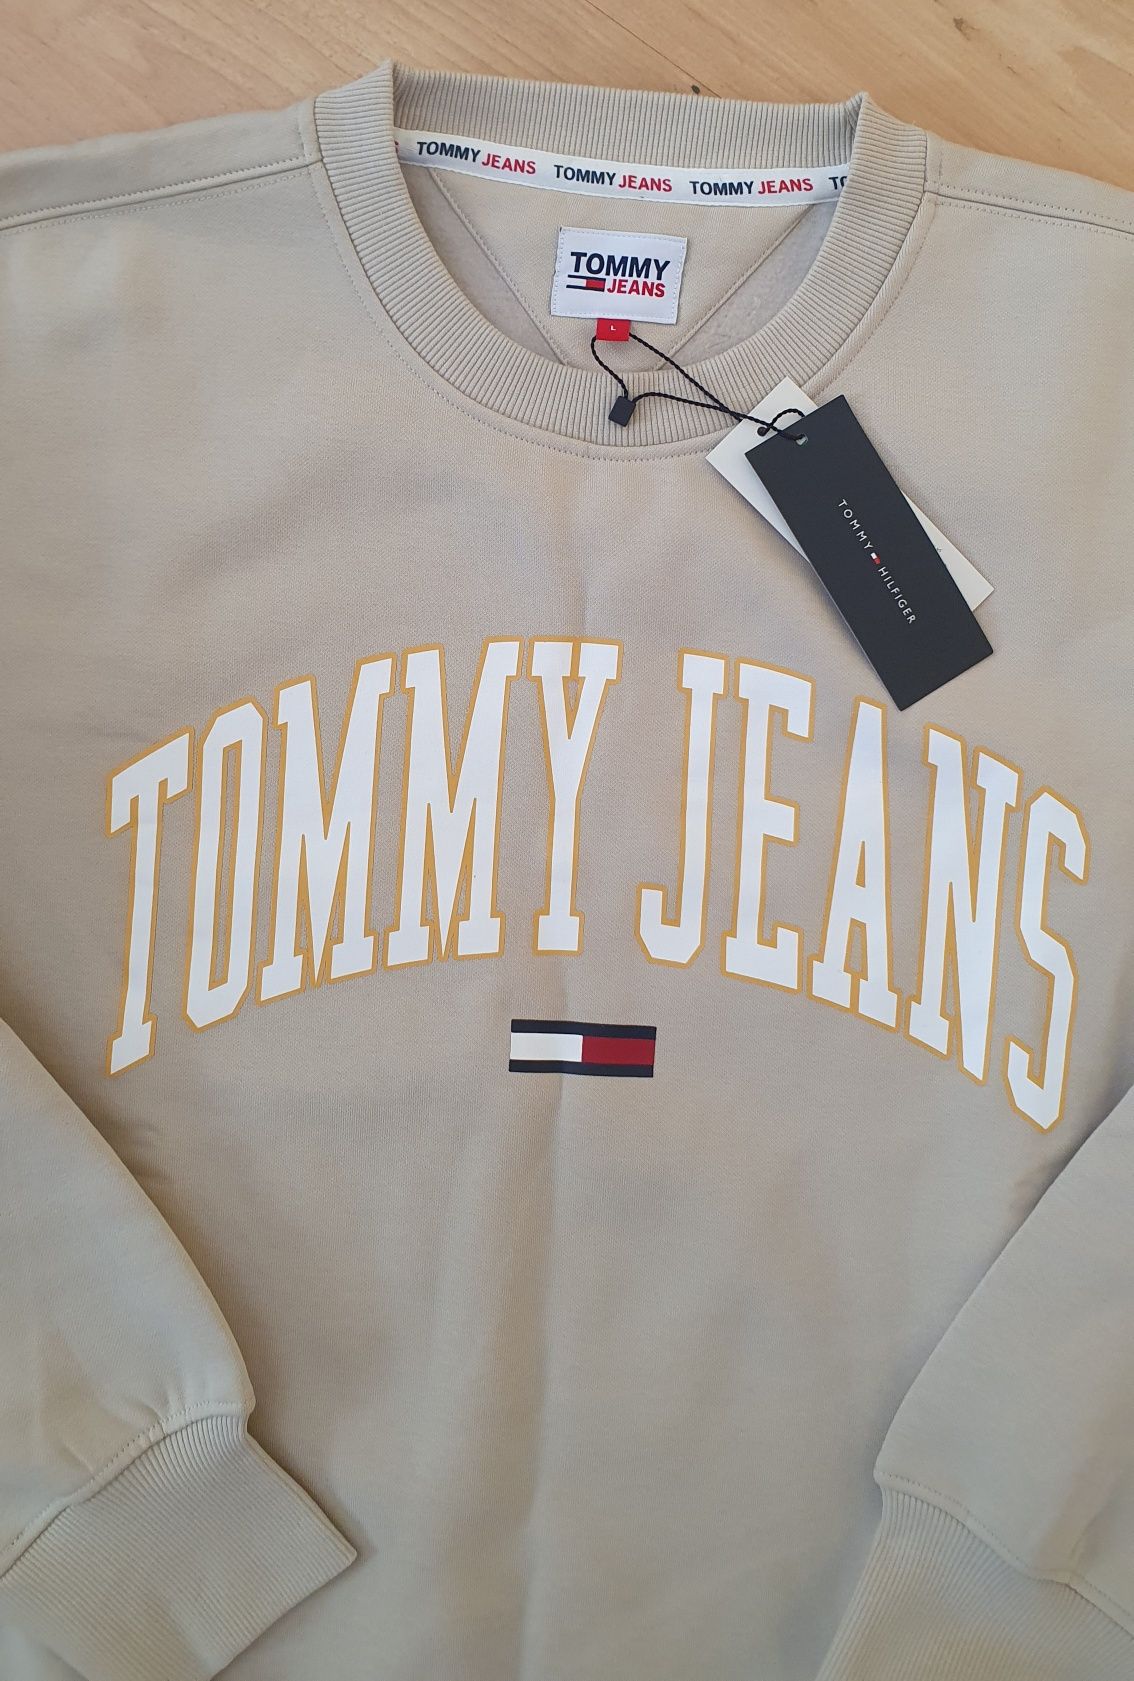 Tommy hilfiger bluza męska tommy jeans rozmiar L/XL